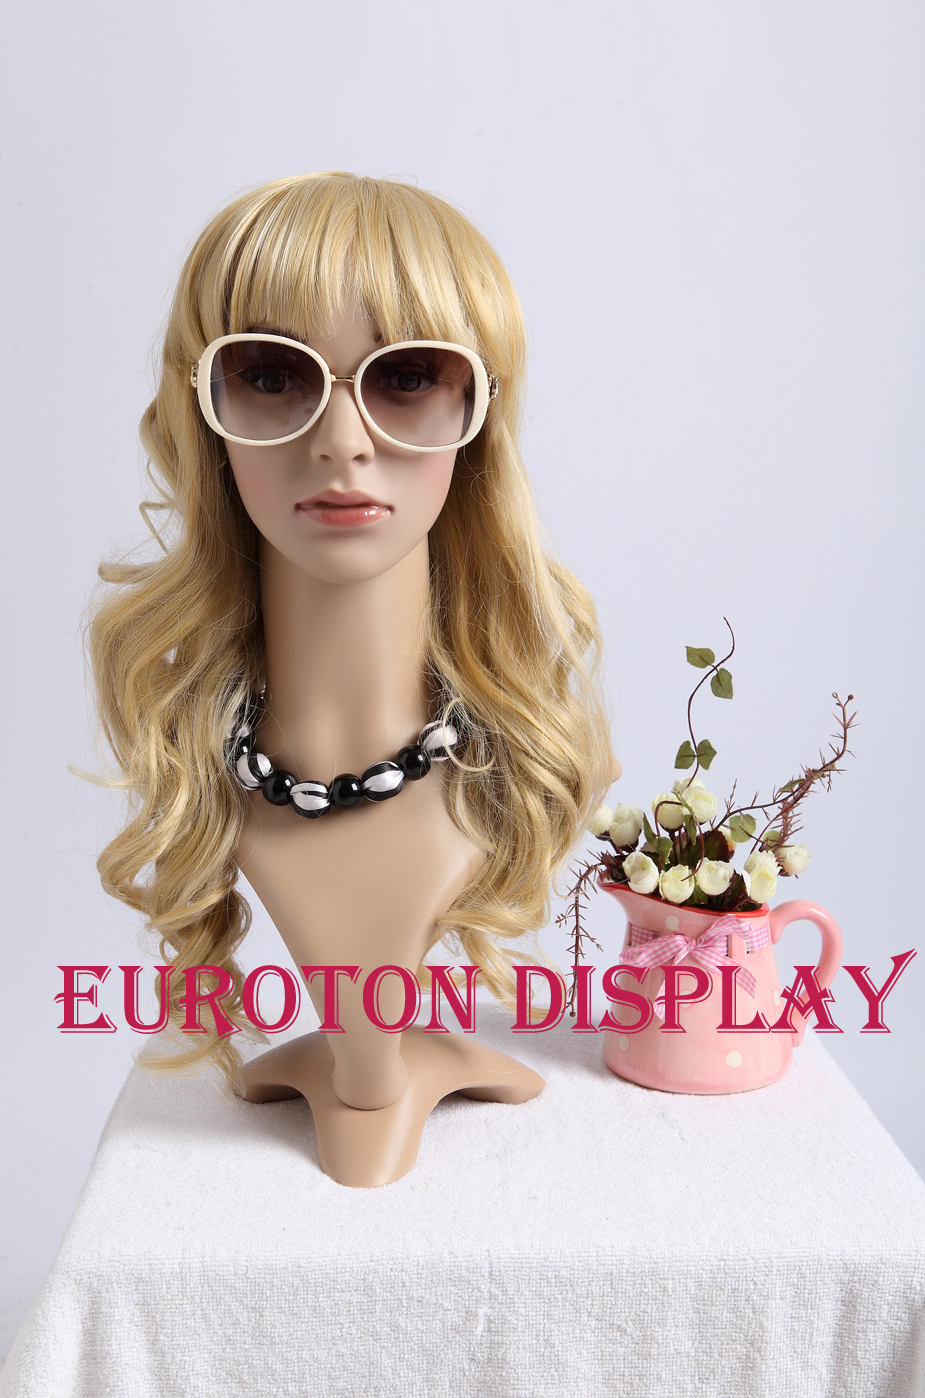 Eurohandisplay FD-2 Dekokopf Per/ückenkopf Schaufensterpuppe Mannequin weiblich